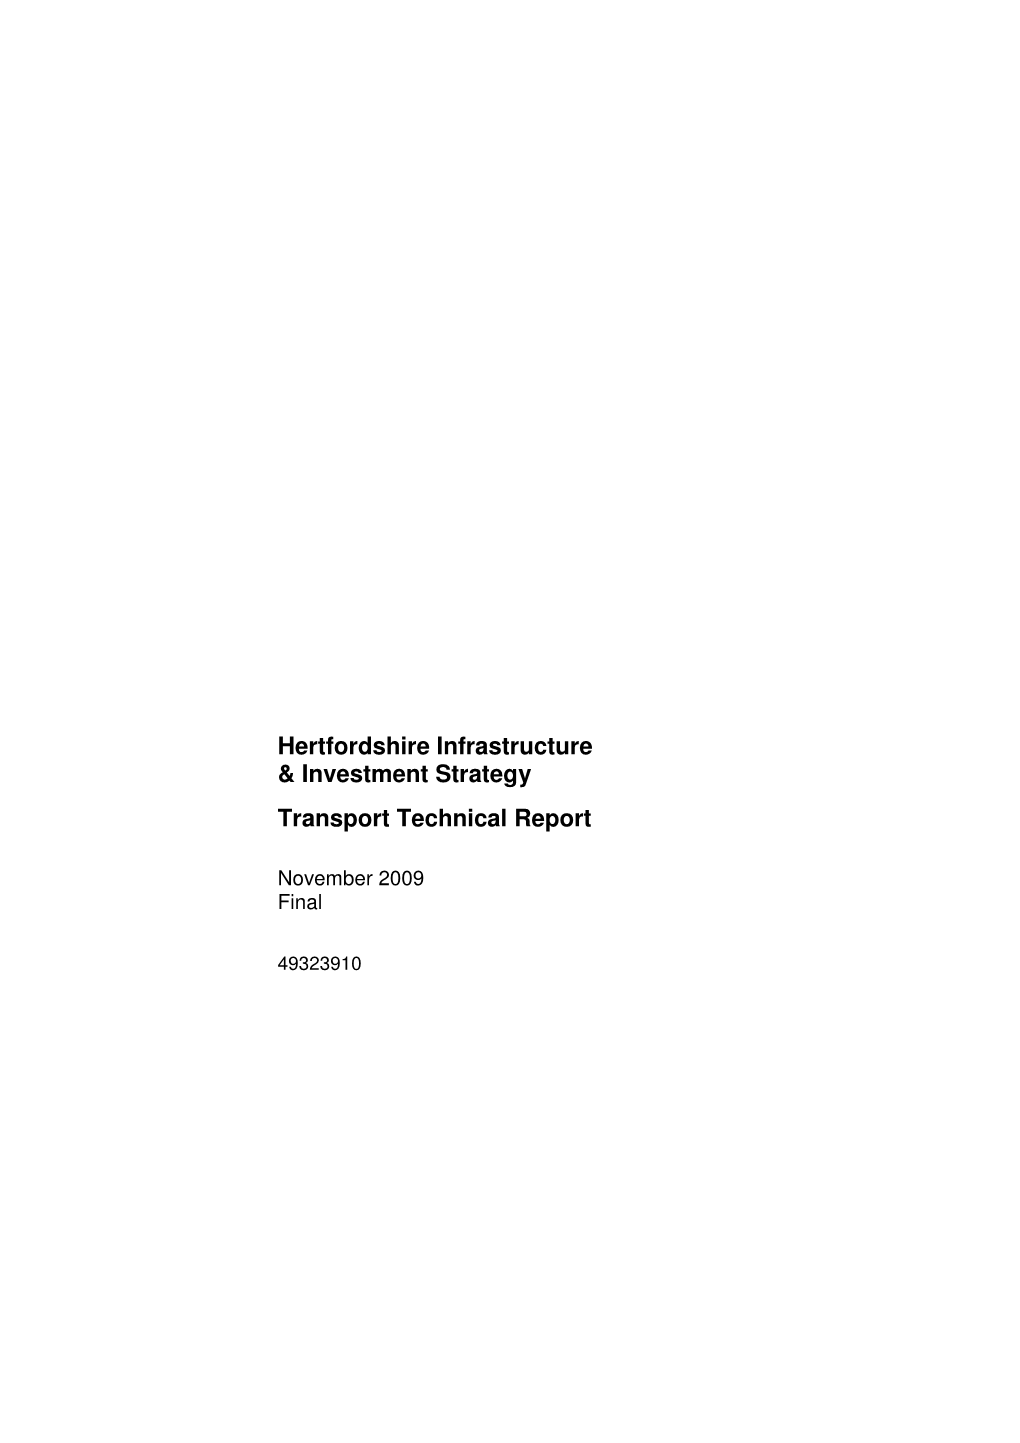 Eb24b HIIS Study 2009 Transport Technical Report